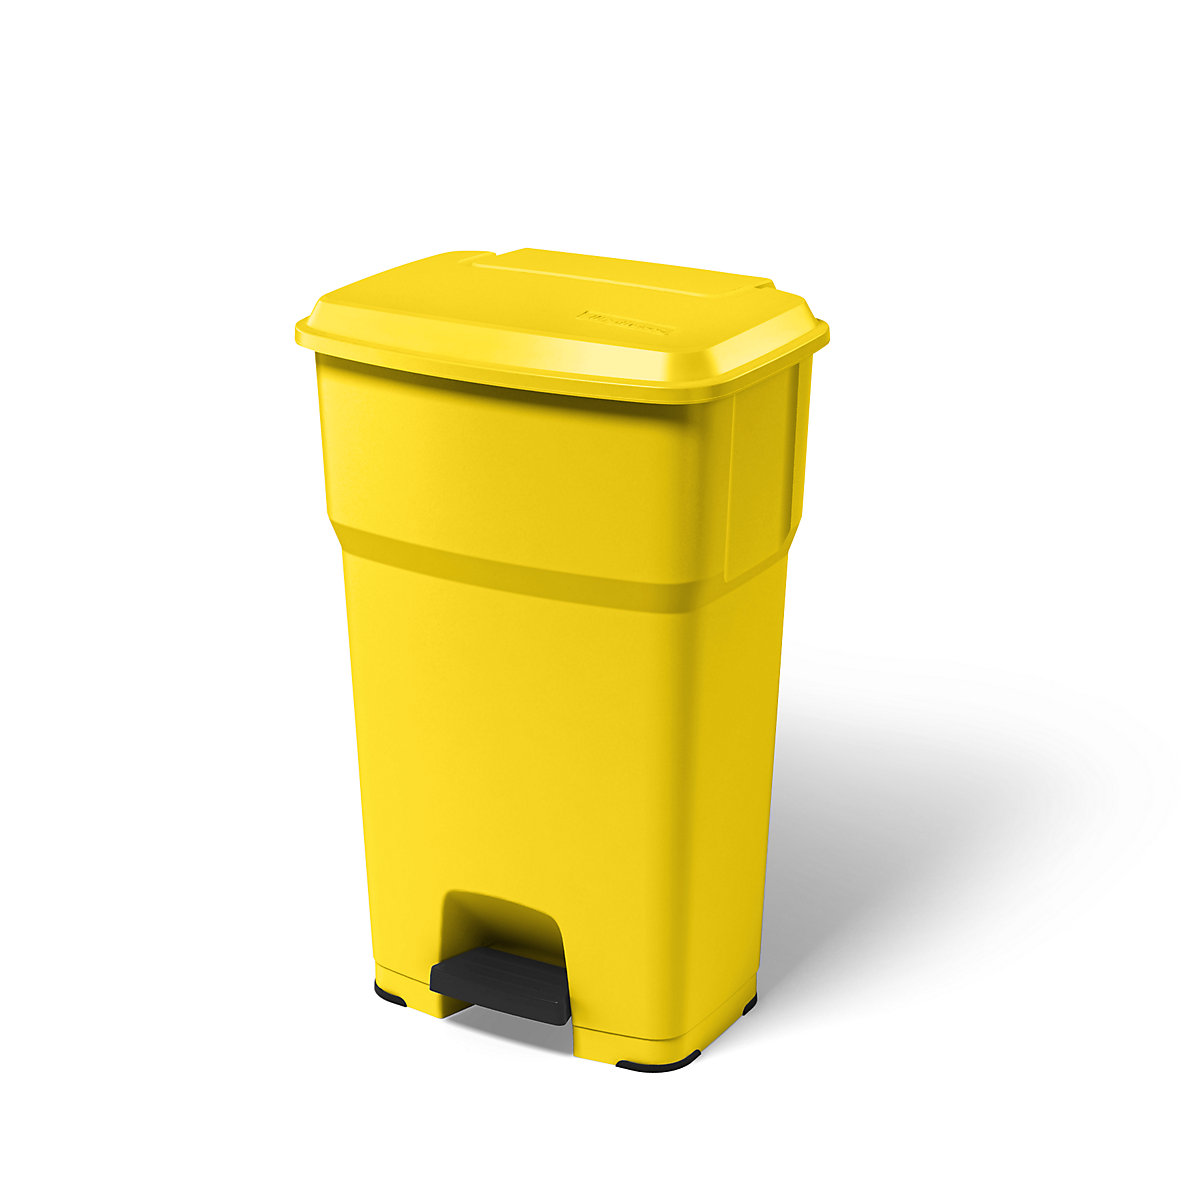 Coletor de lixo com pedal HERA – rothopro, volume 85 l, LxAxP 490 x 790 x 390 mm, amarelo-6